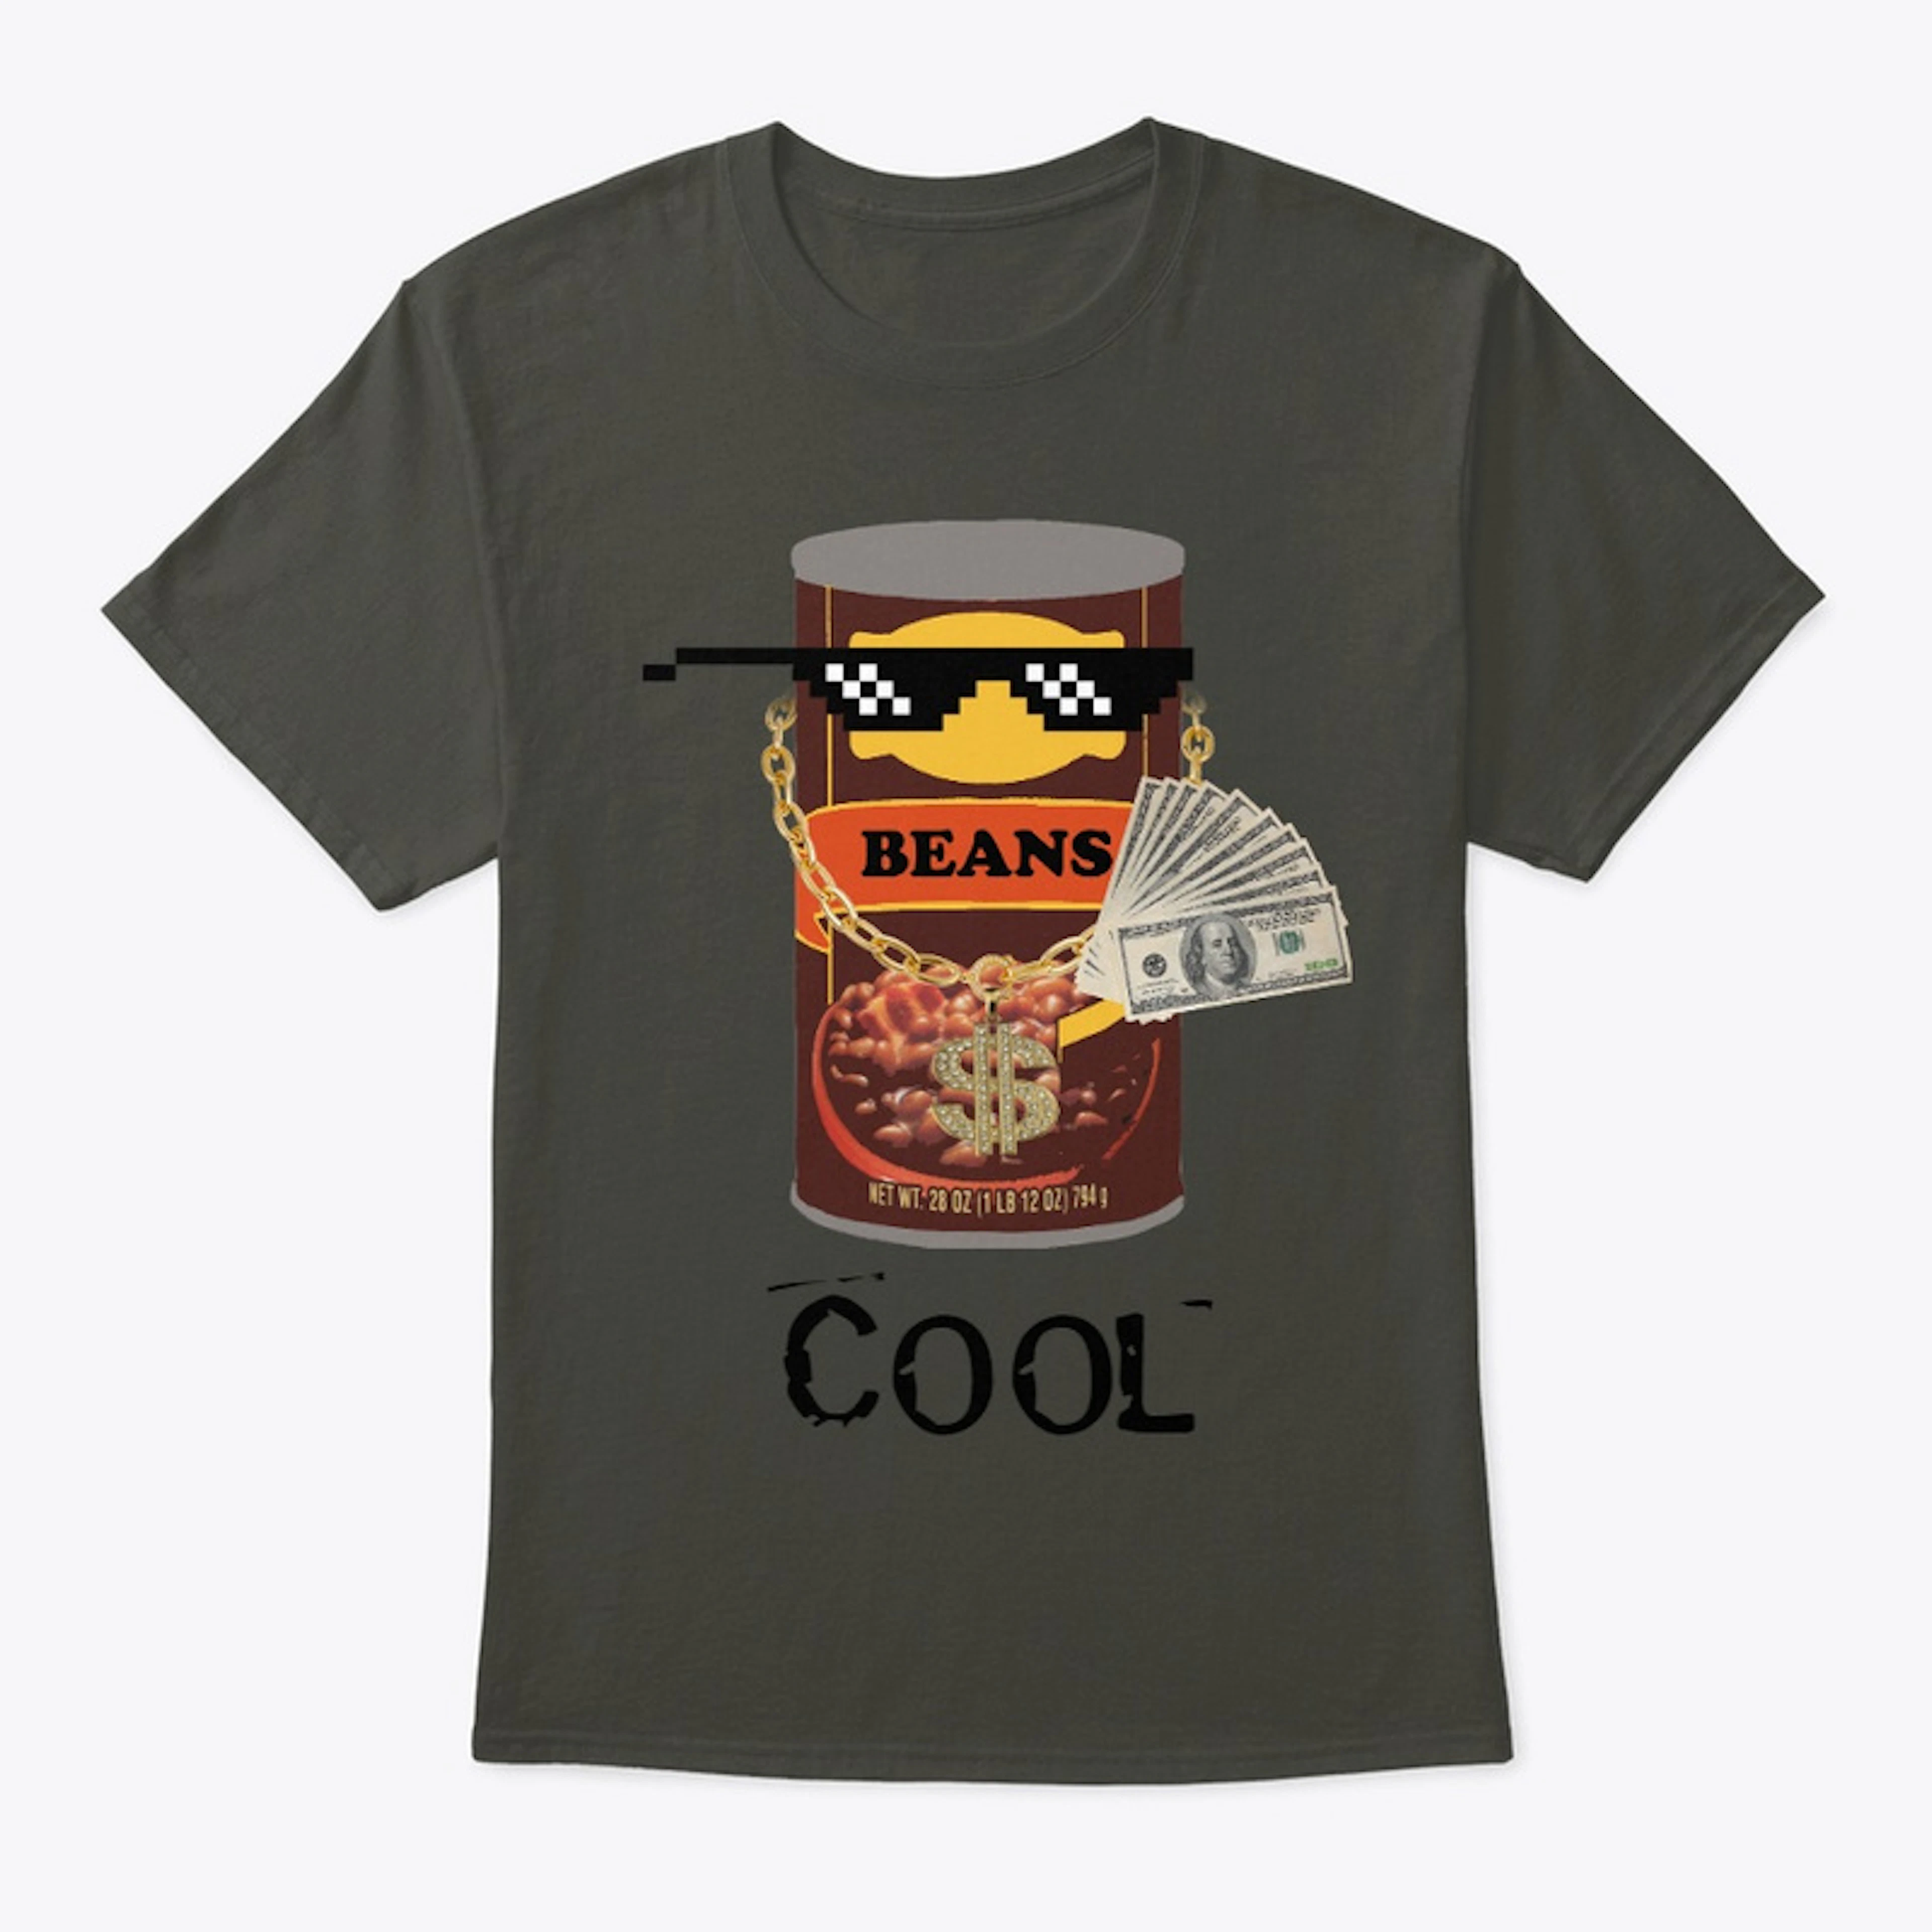 Cool Beans